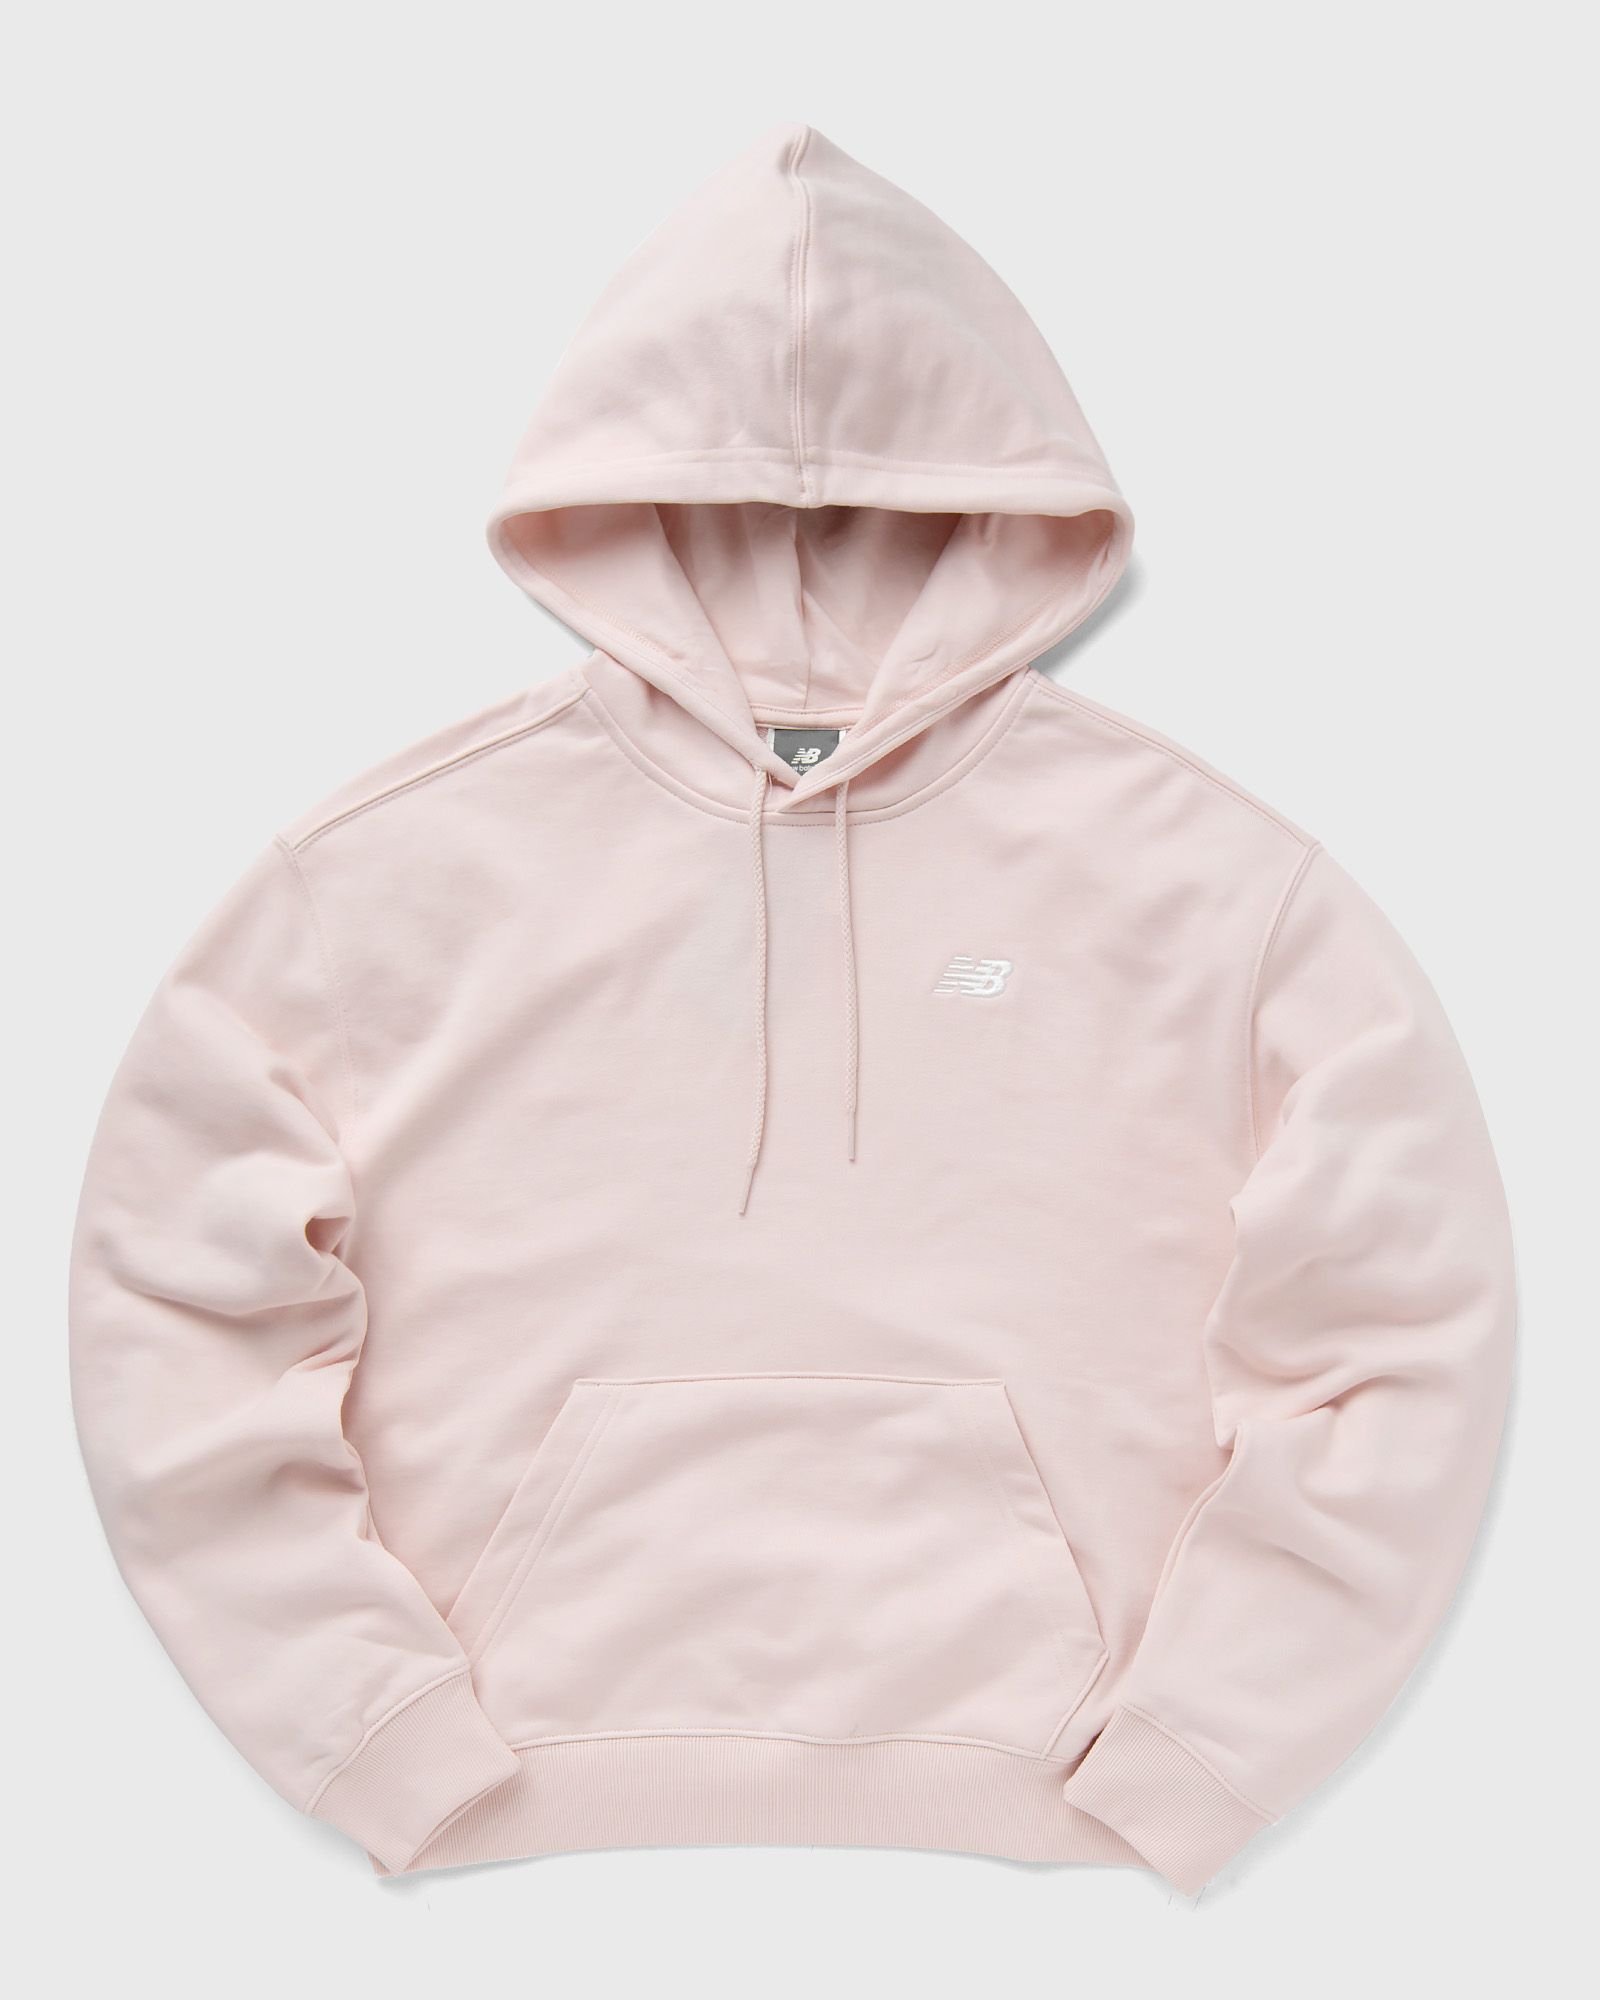 New Balance - sport essentials french terry small logo hoodie women hoodies pink in größe:l